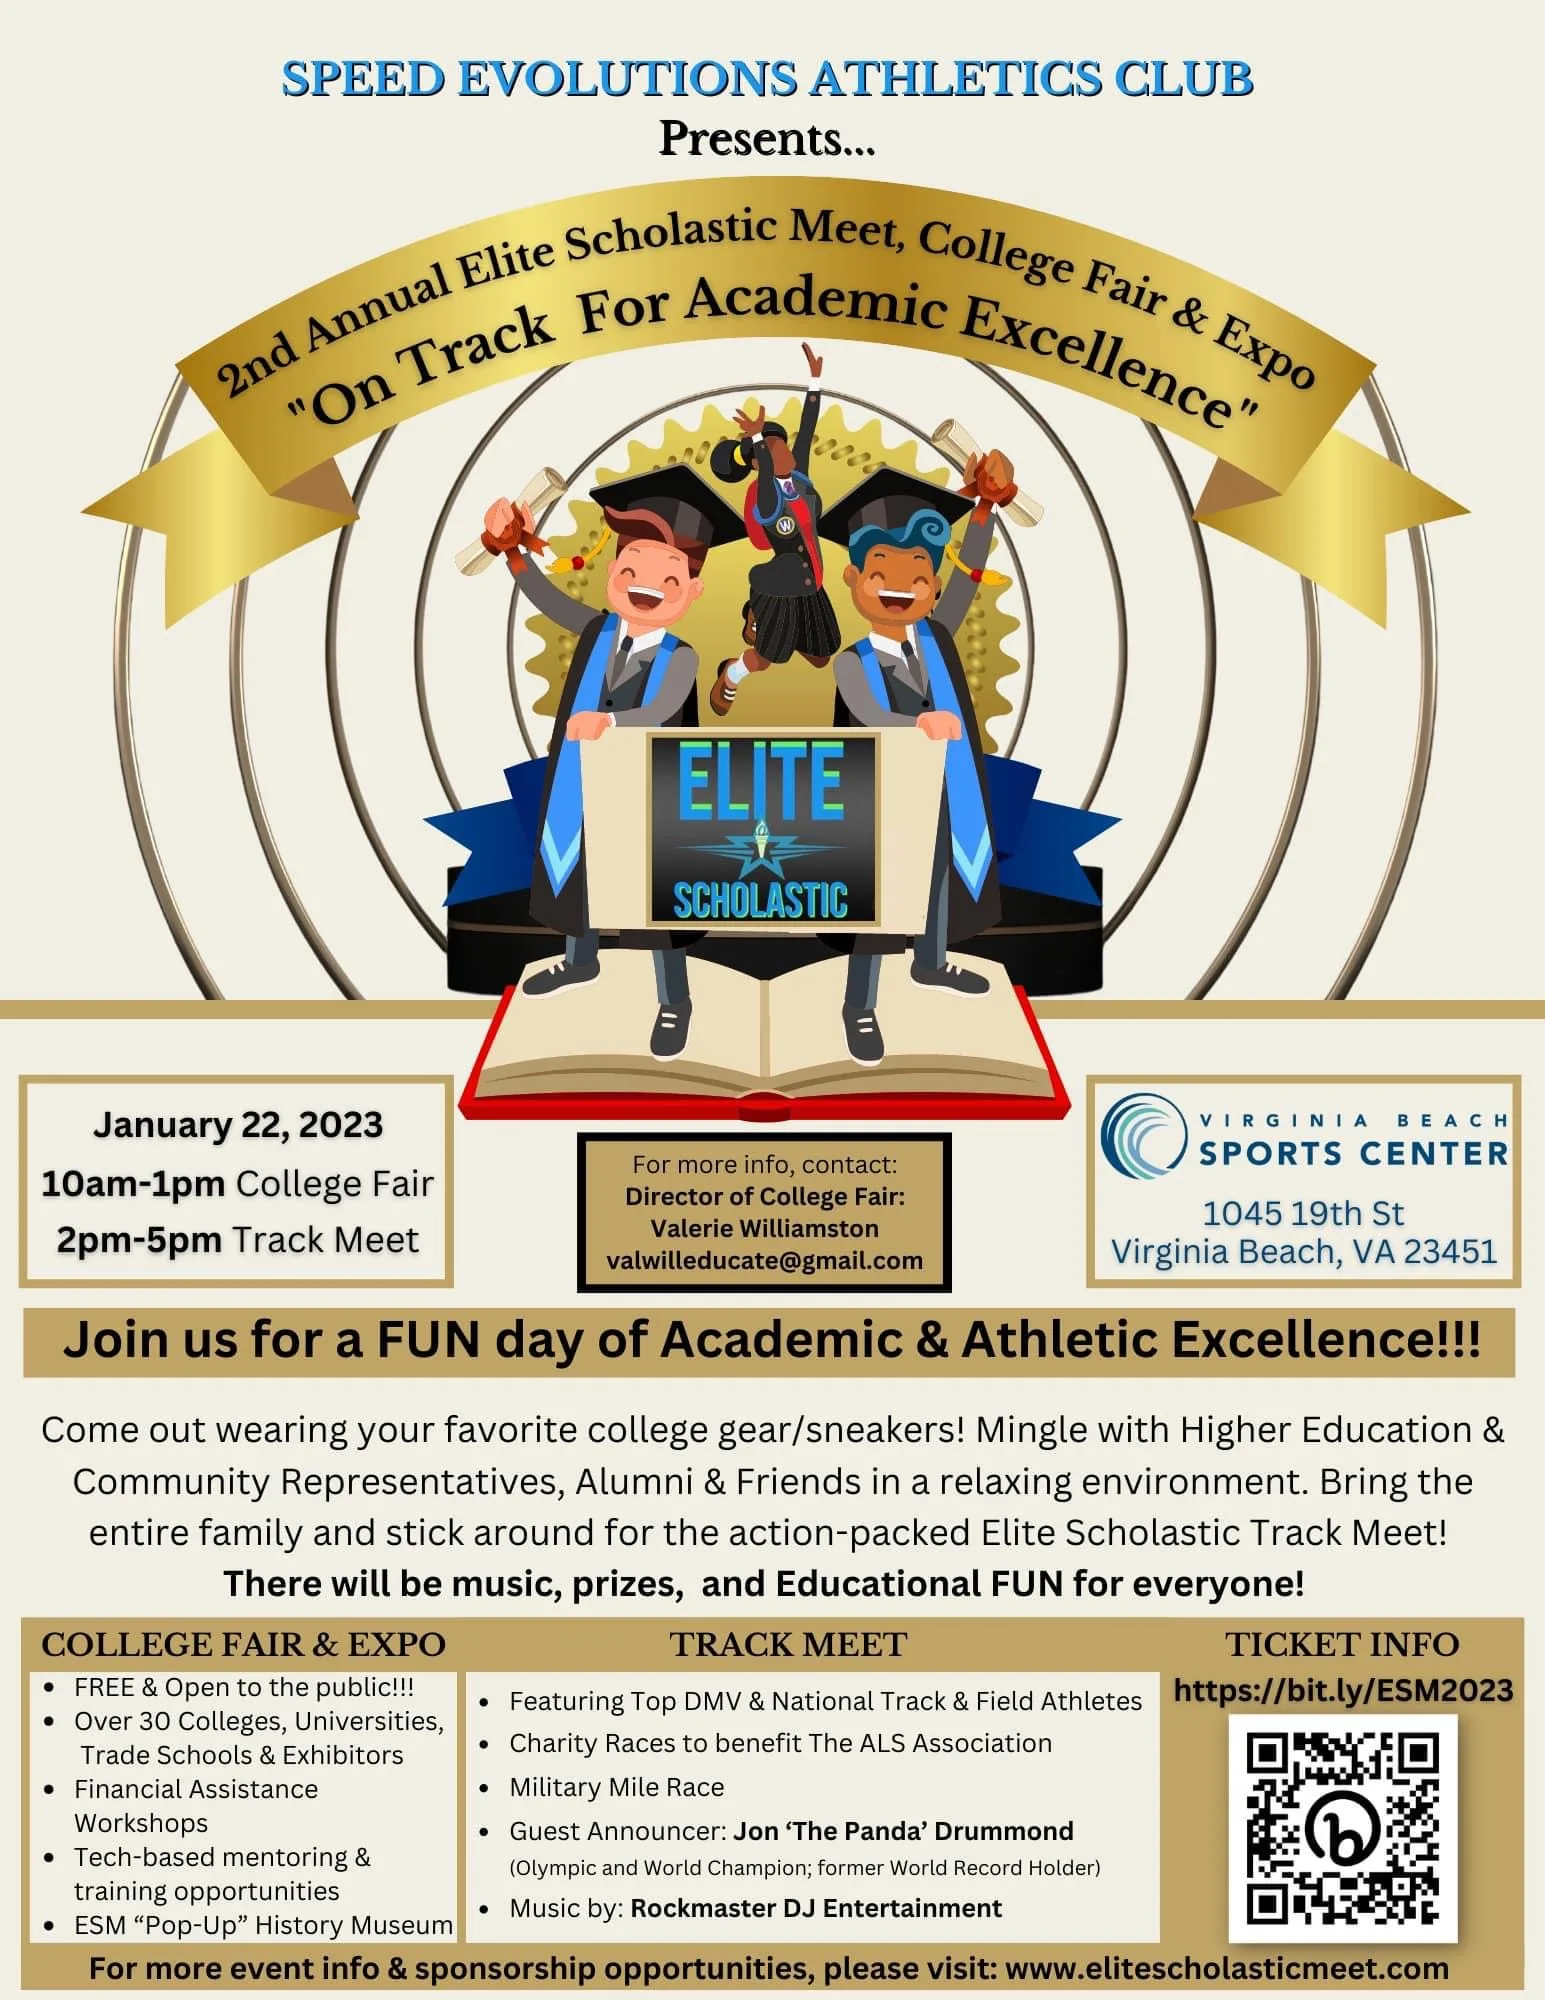 2nd Annual Elite Scholastic Meet, College Fair&Expo